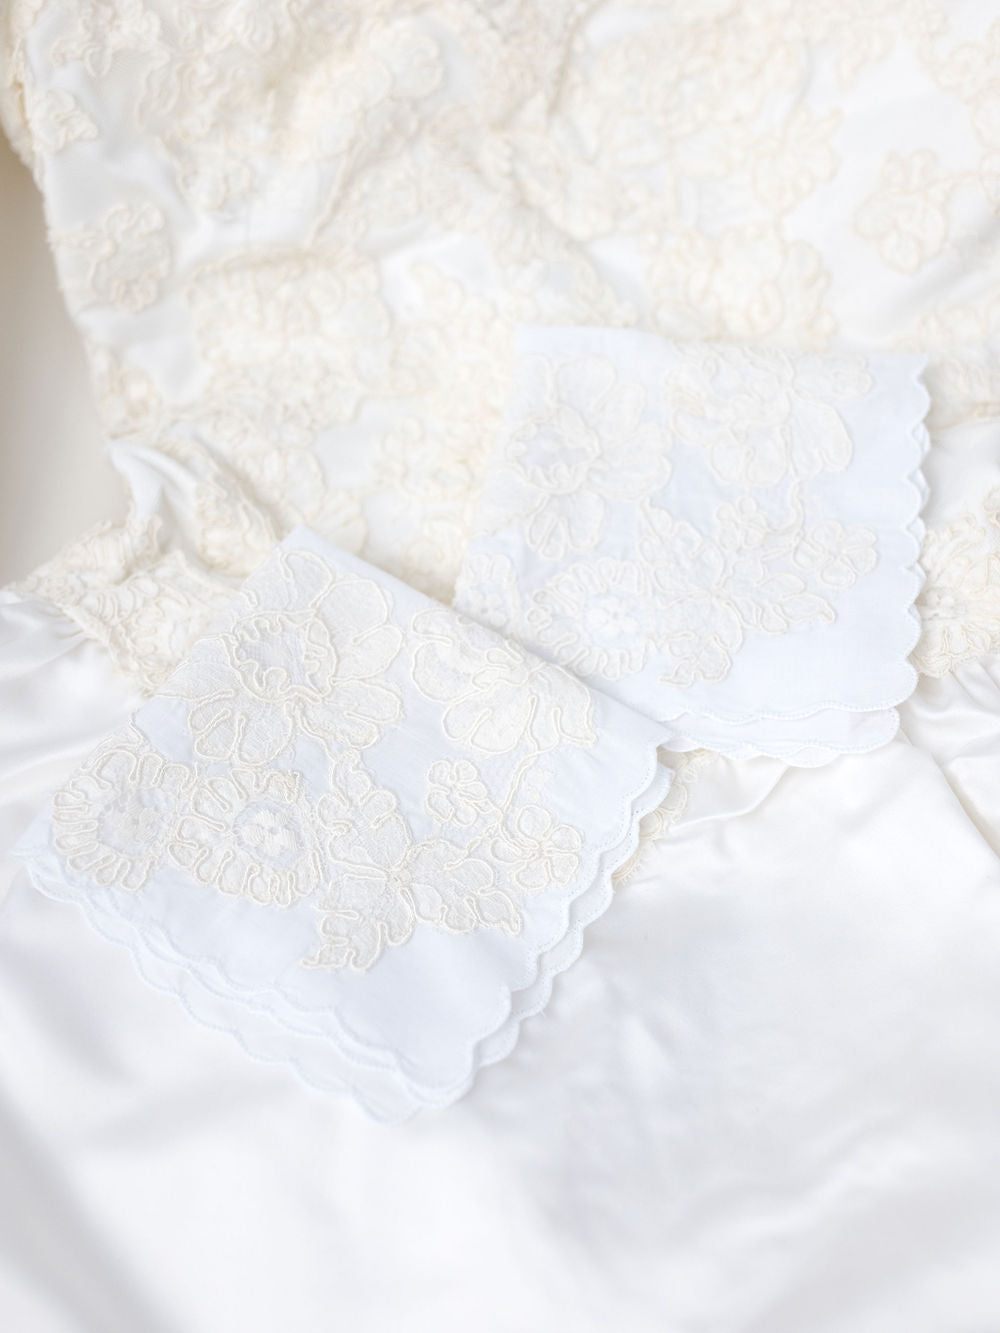 2 lace wedding handkerchief accessory heirlooms handmade by The Garter Girl